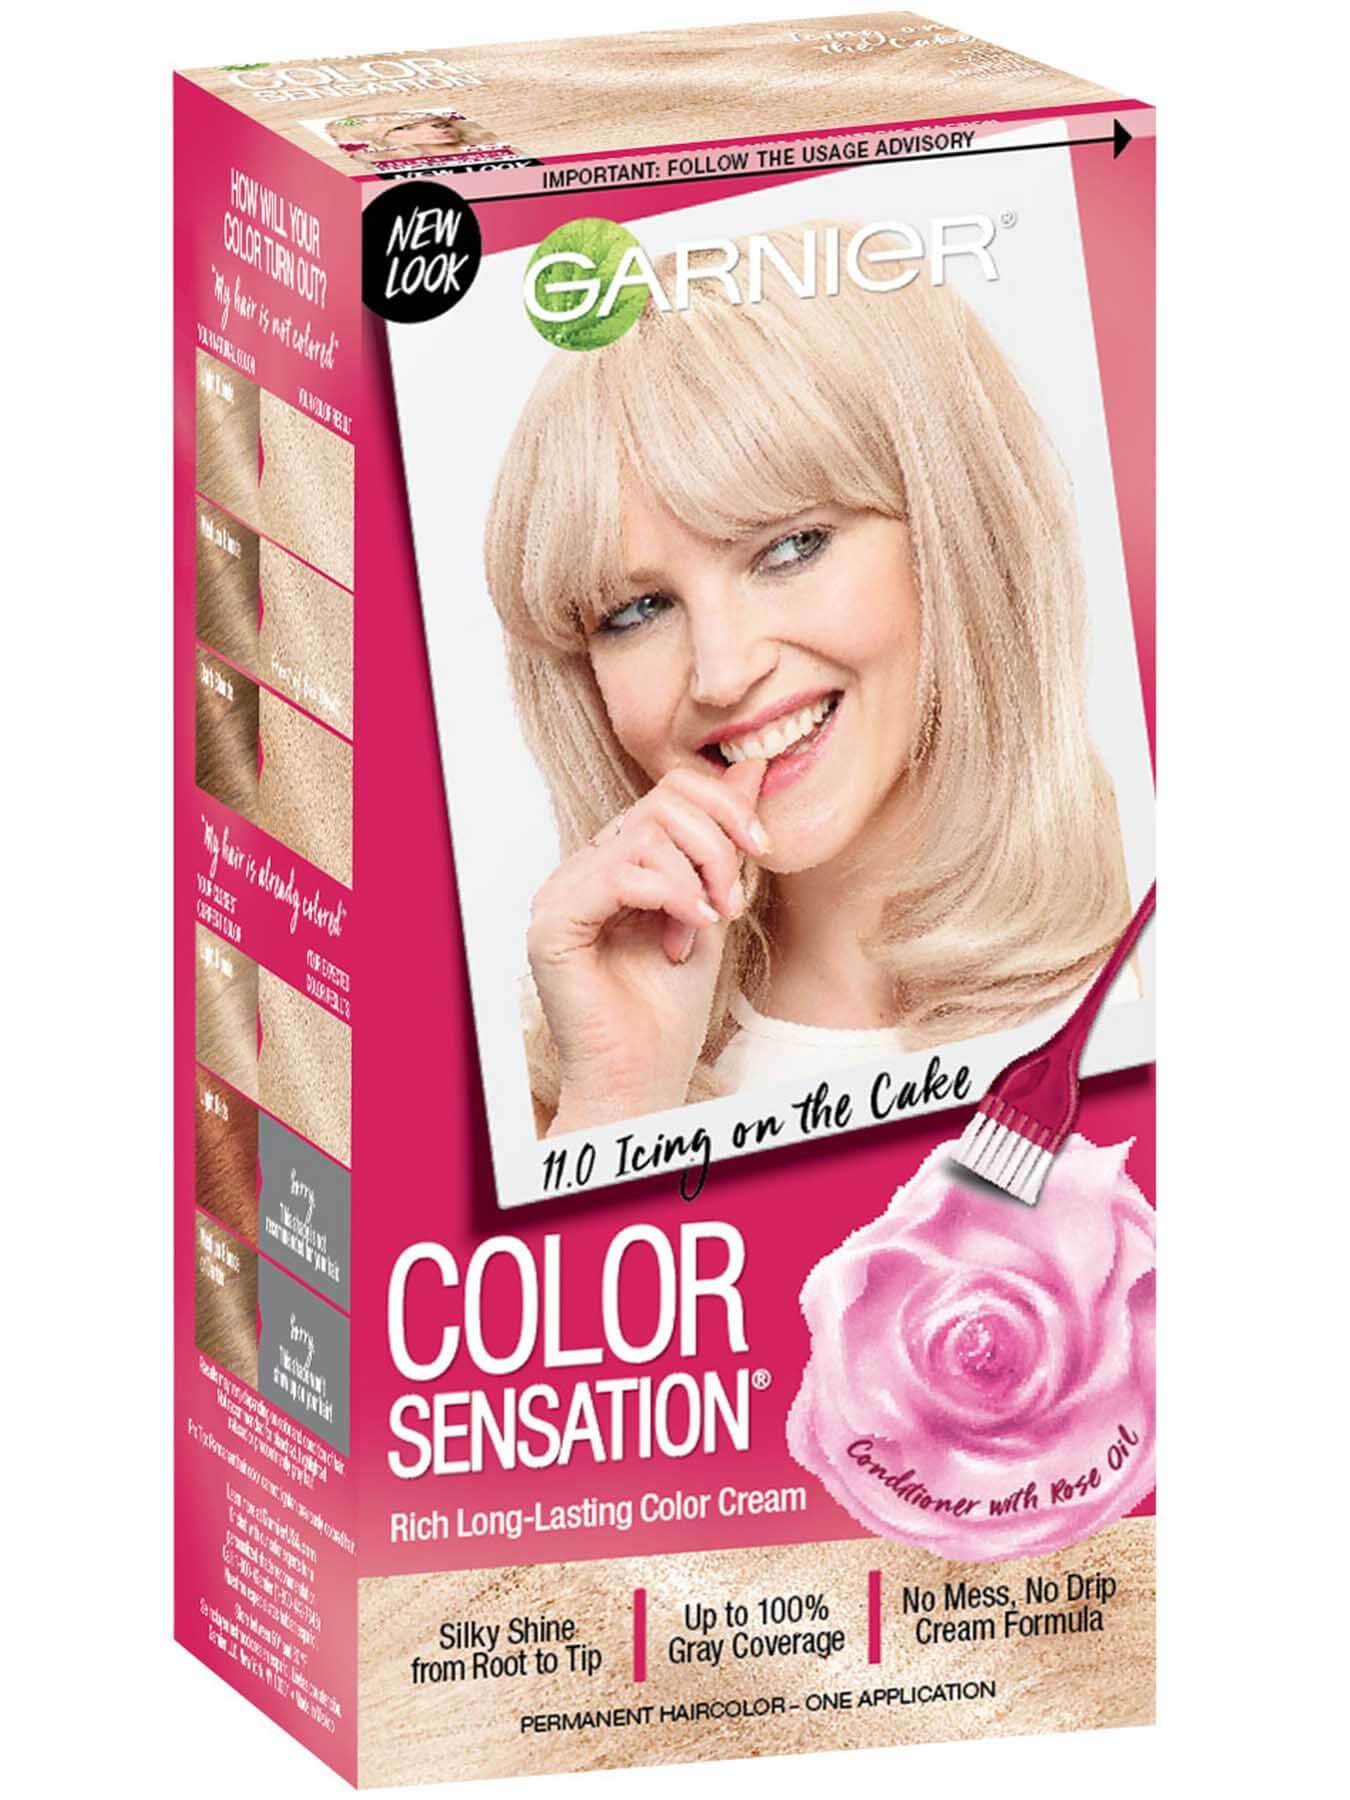 Permanent Semi Permanent And Temporary Hair Color Garnier